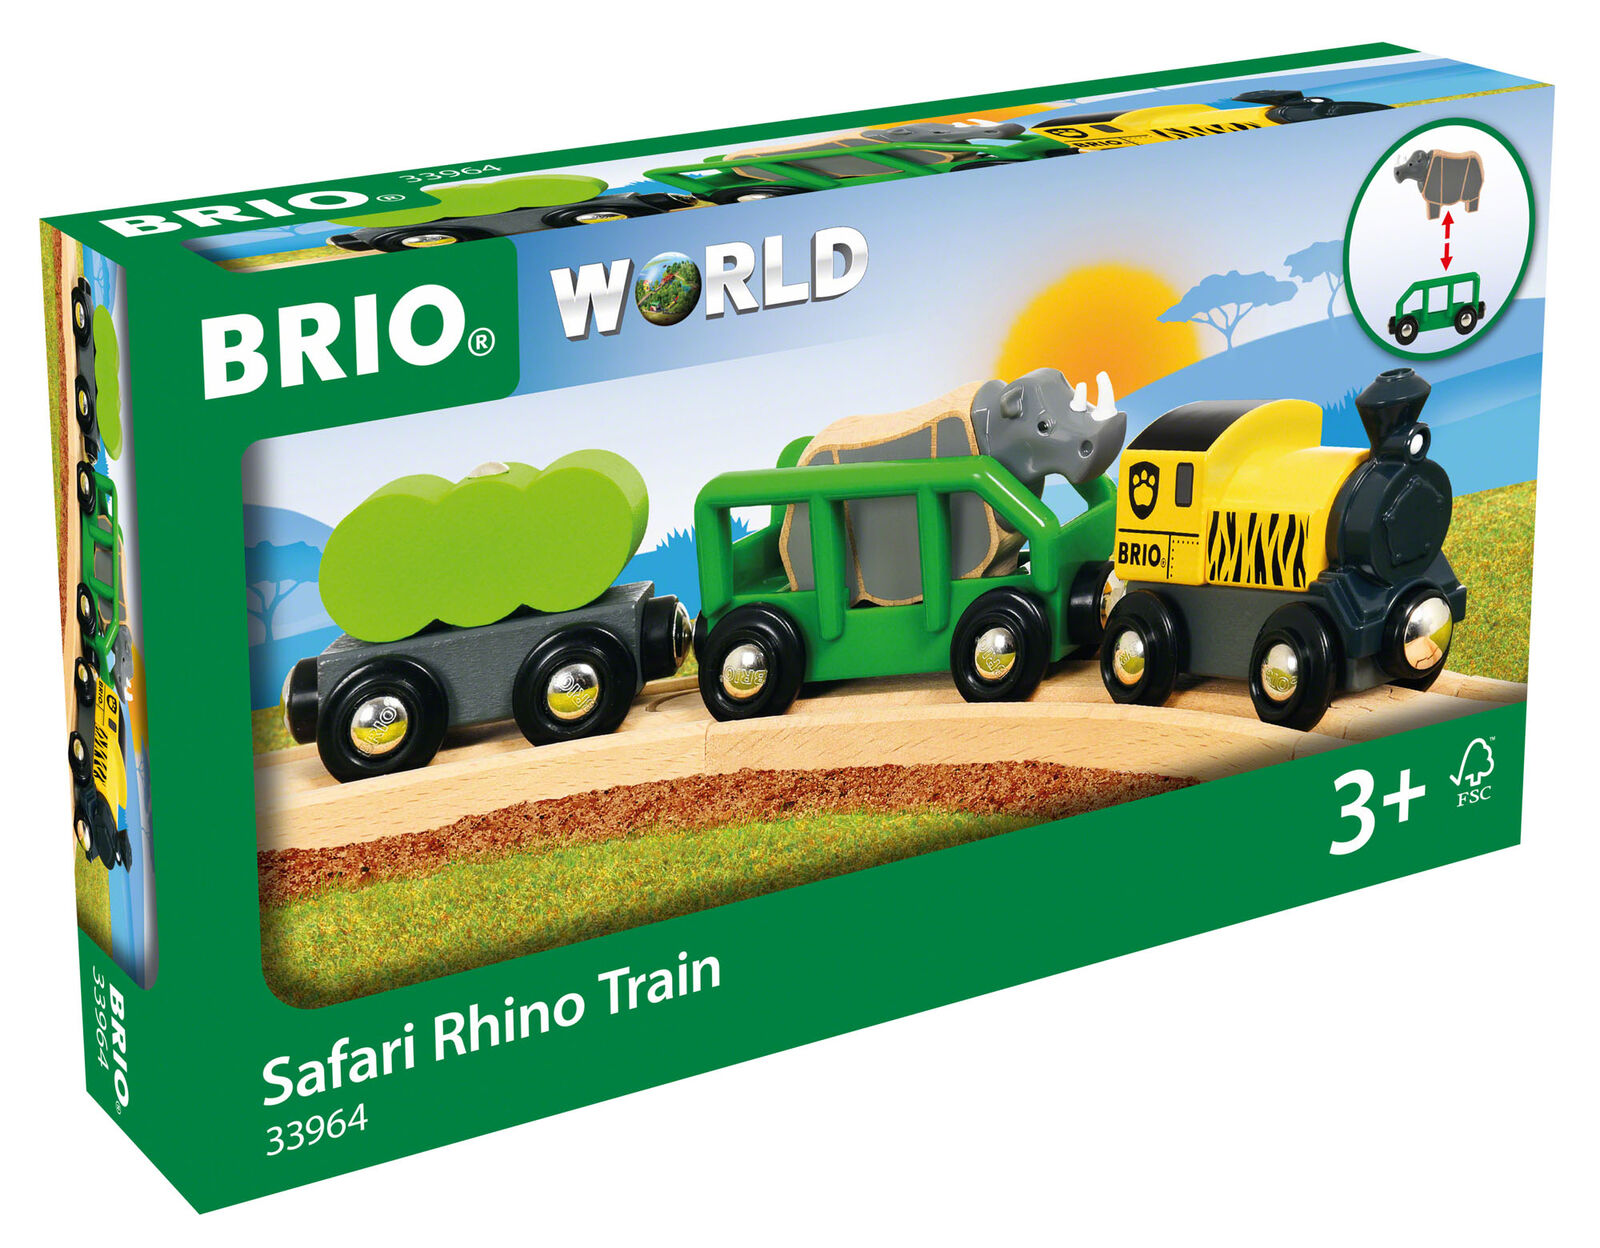 33964 BRIO WORLD Safari Rhino Train Wooden Plastic Magnetic Railway Children 3+